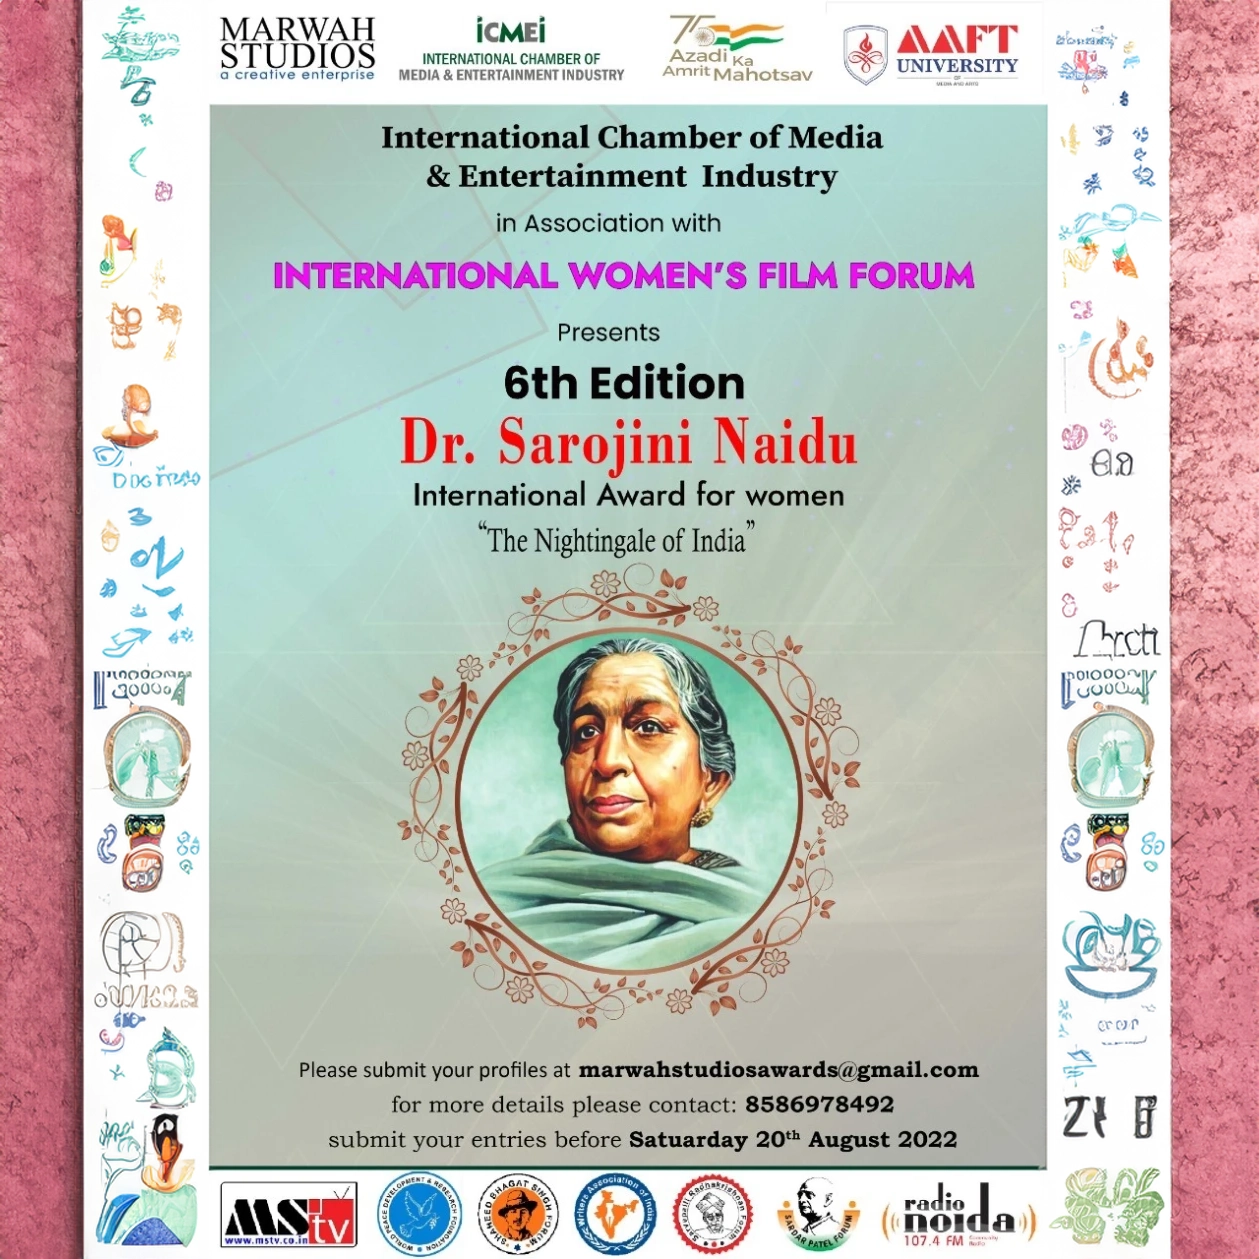 6th Edition of Sarojni Naidu International Award for Working Women Announced